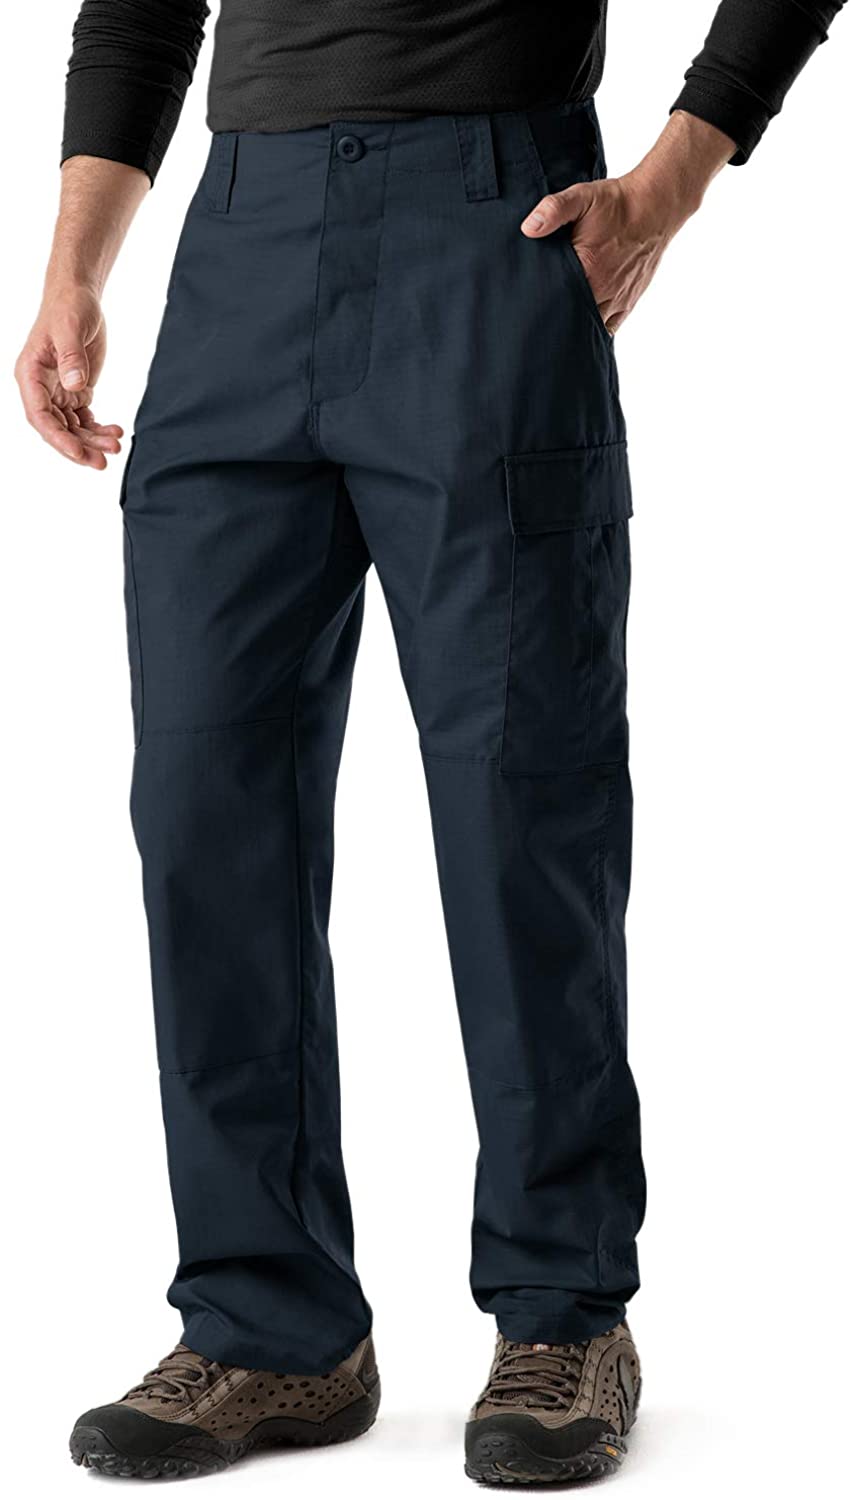 Hiking Outdoor Apparel CQR Men's Tactical Pants Water Resistant Ripstop Work Pants Military Combat BDU/ACU Cargo Pants 